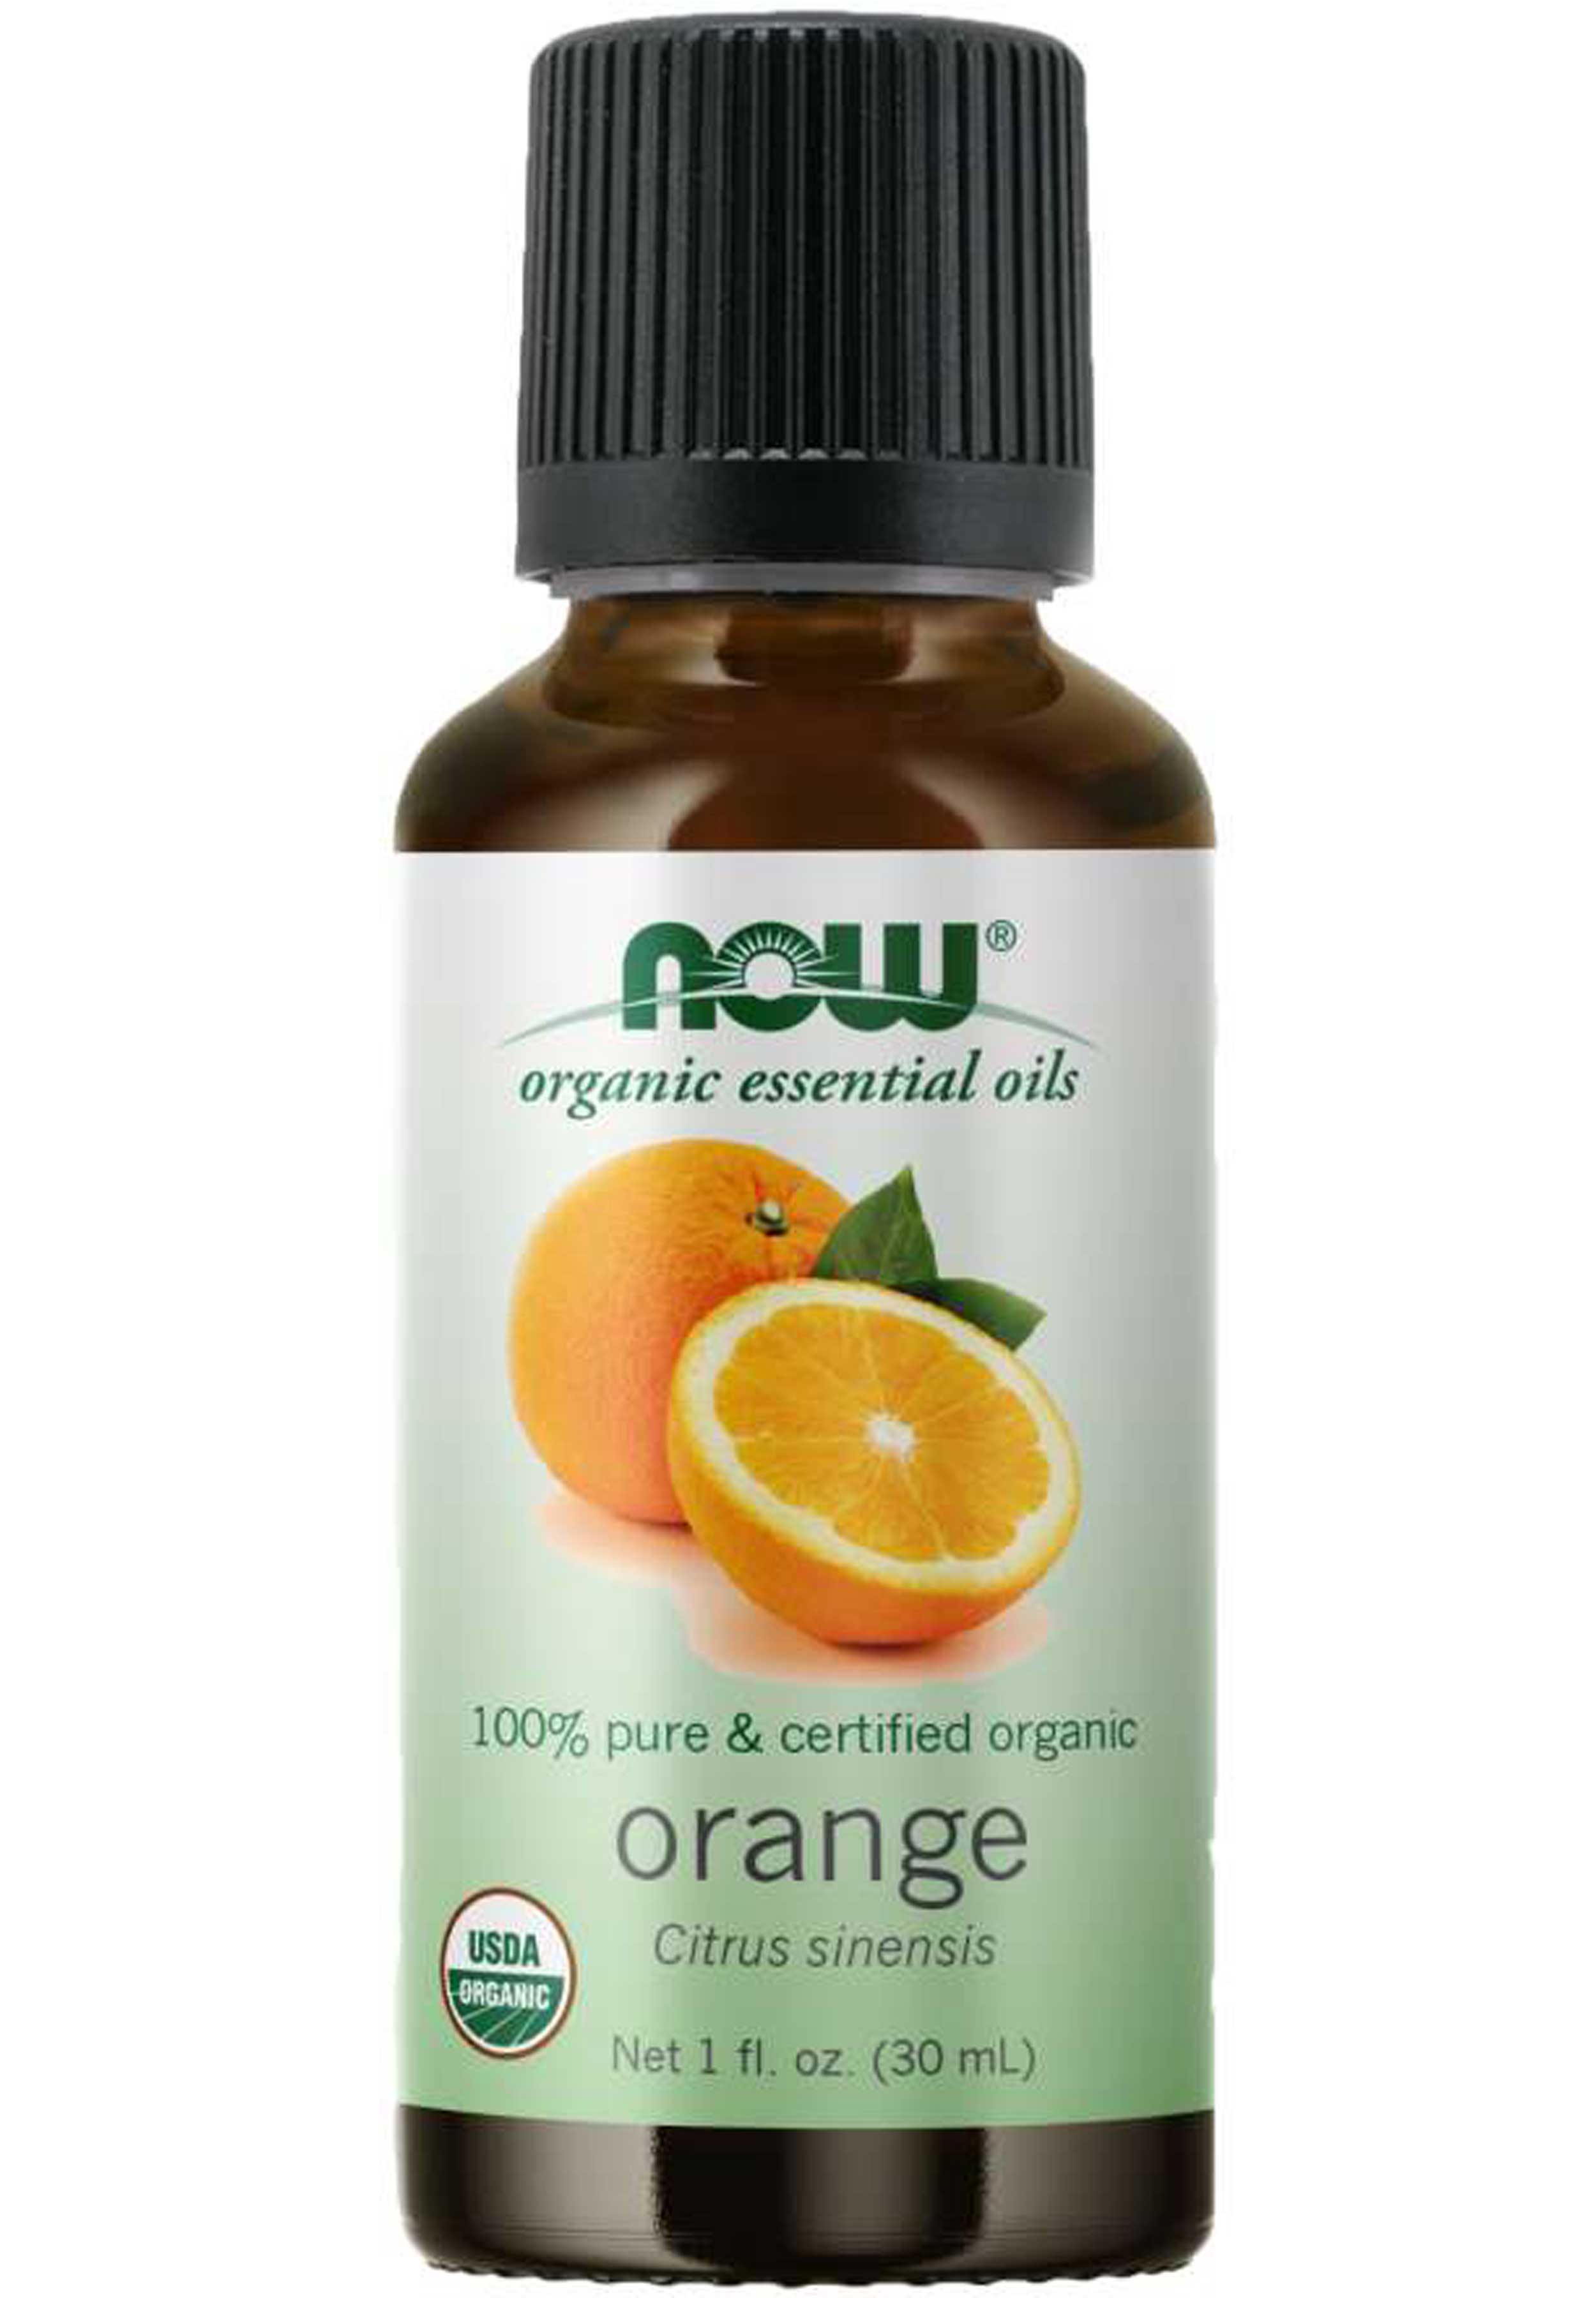 NOW Orange Oil Organic